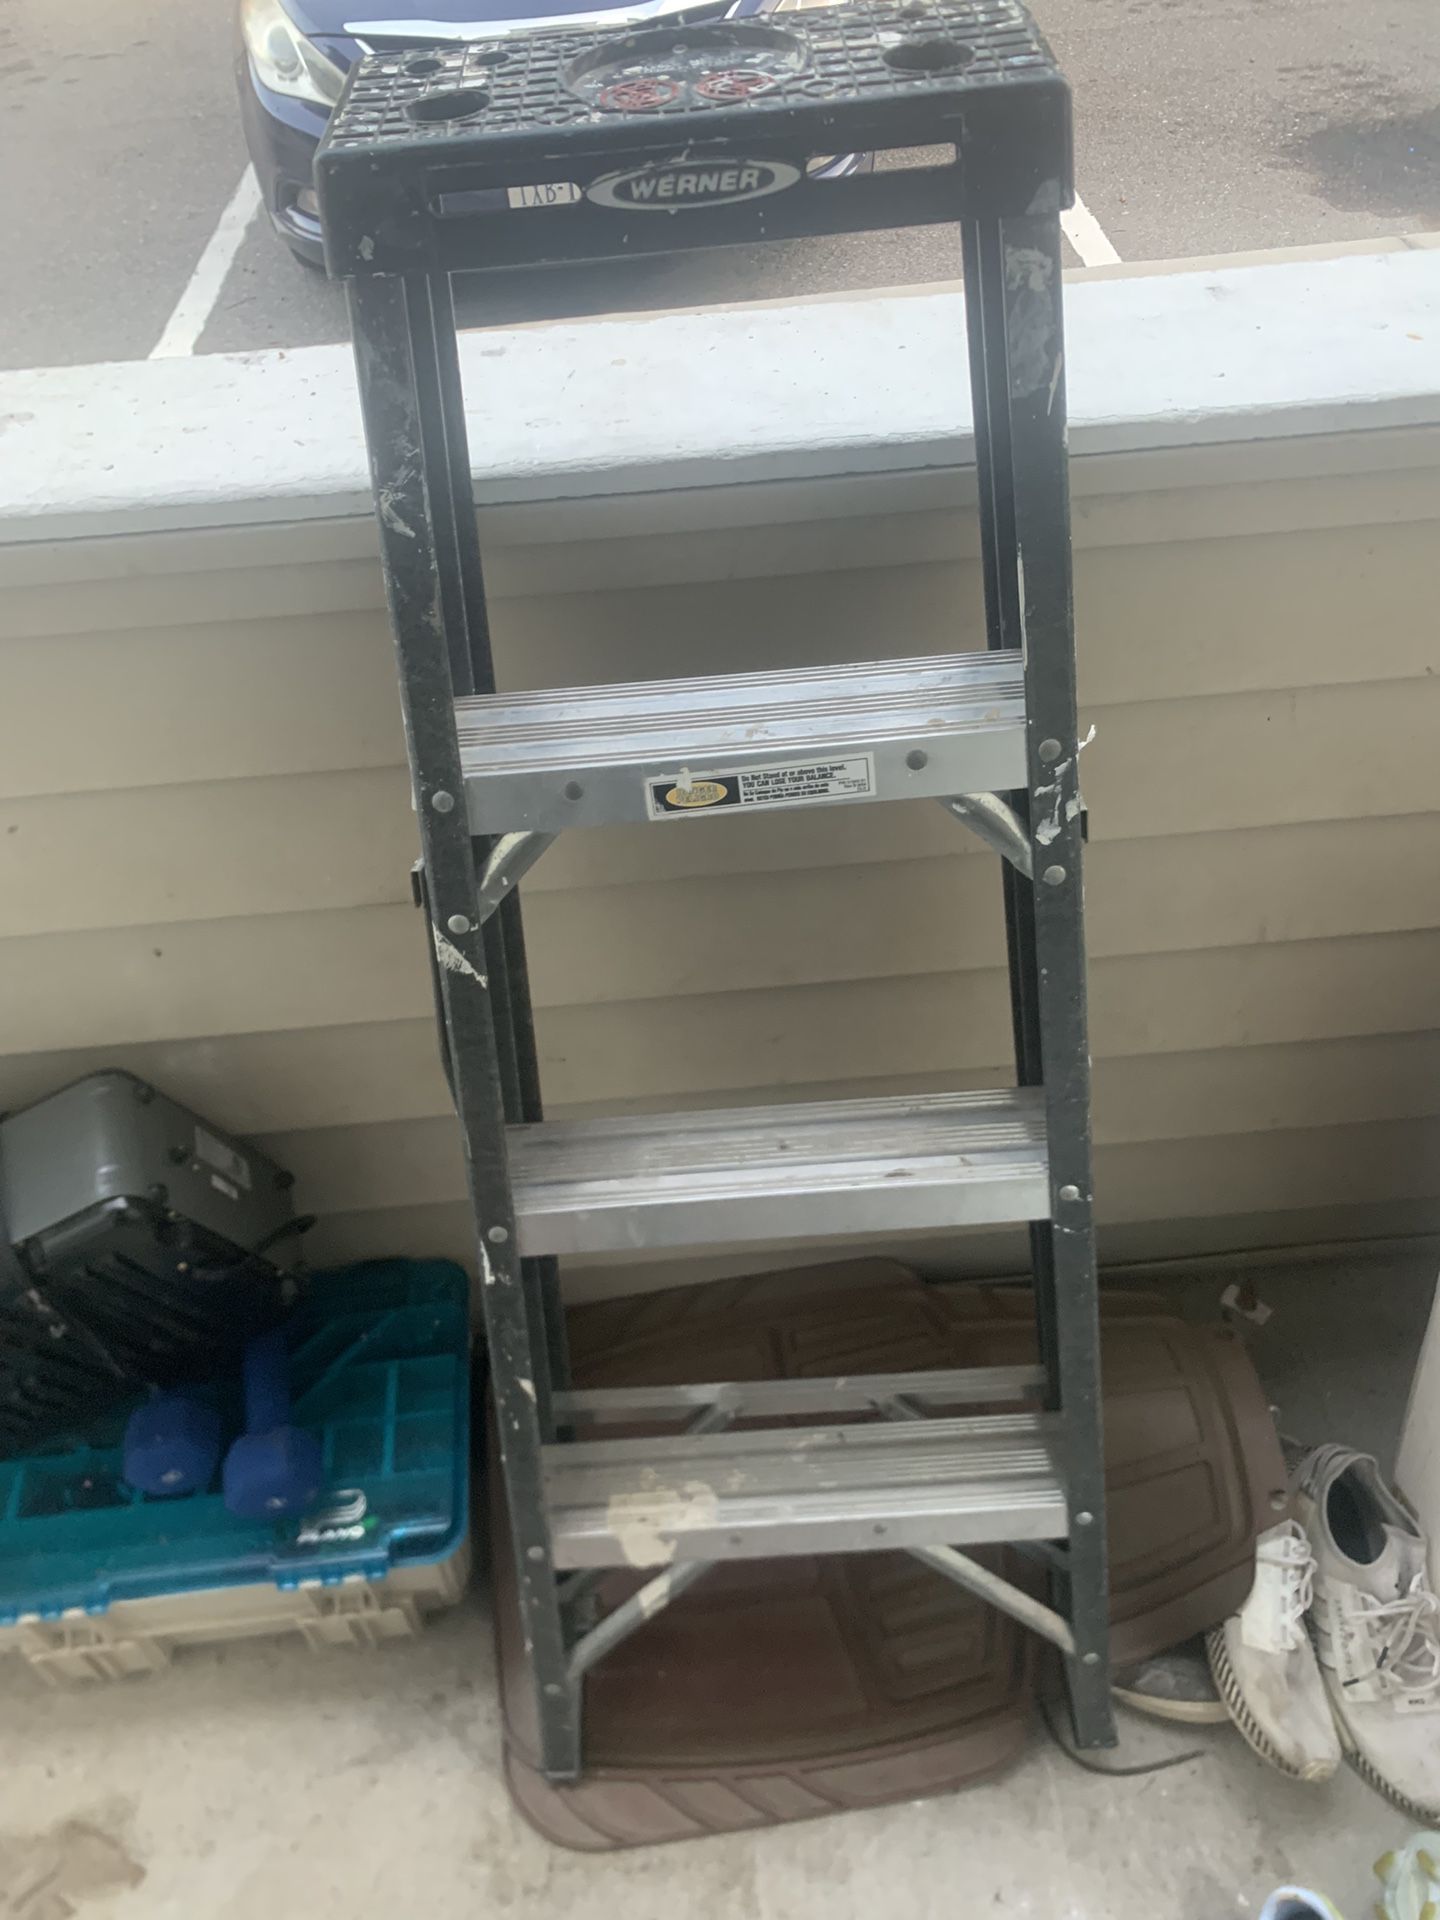 Small Ladder 